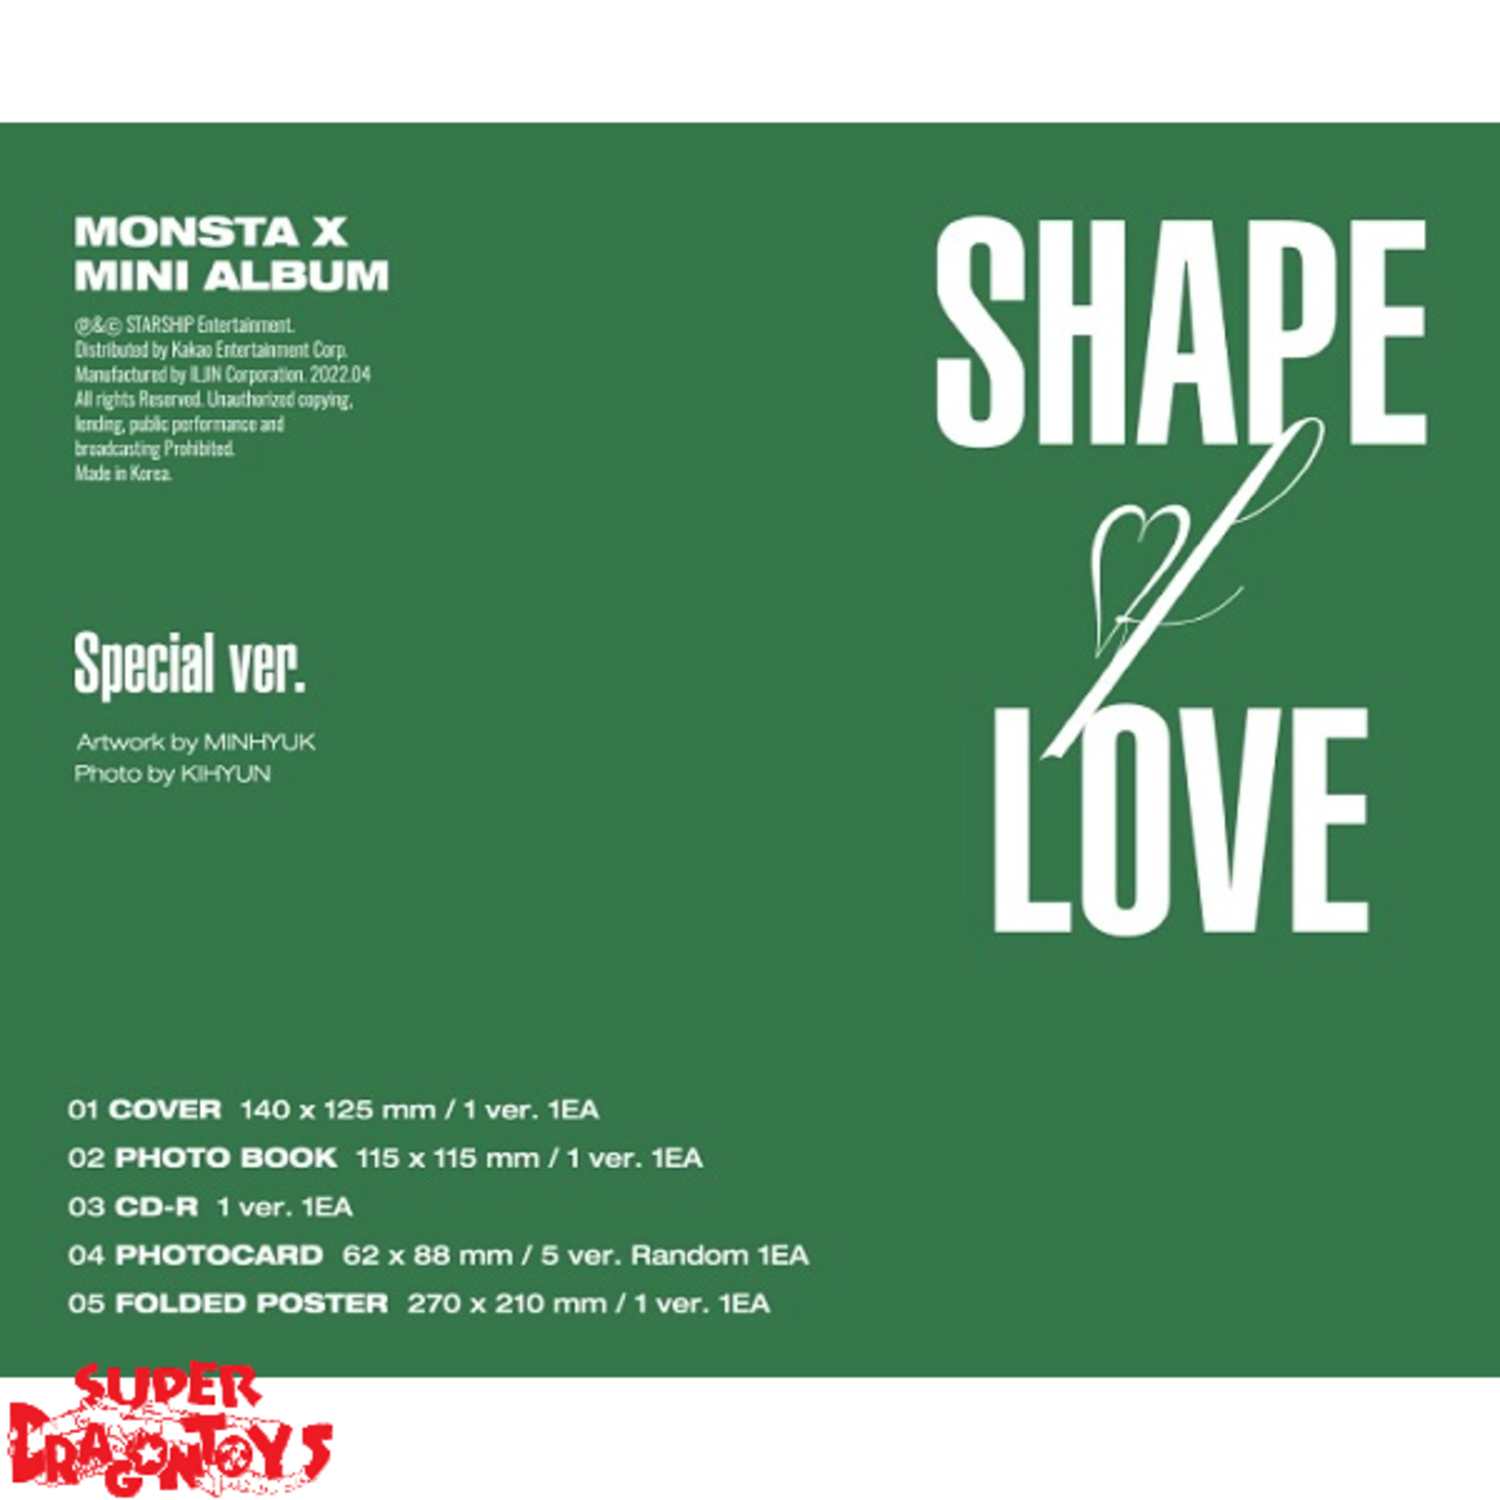 MONSTA X (몬스타엑스) - SHAPE OF LOVE - 11TH MINI ALBUM - SUPERDRAGONTOYS